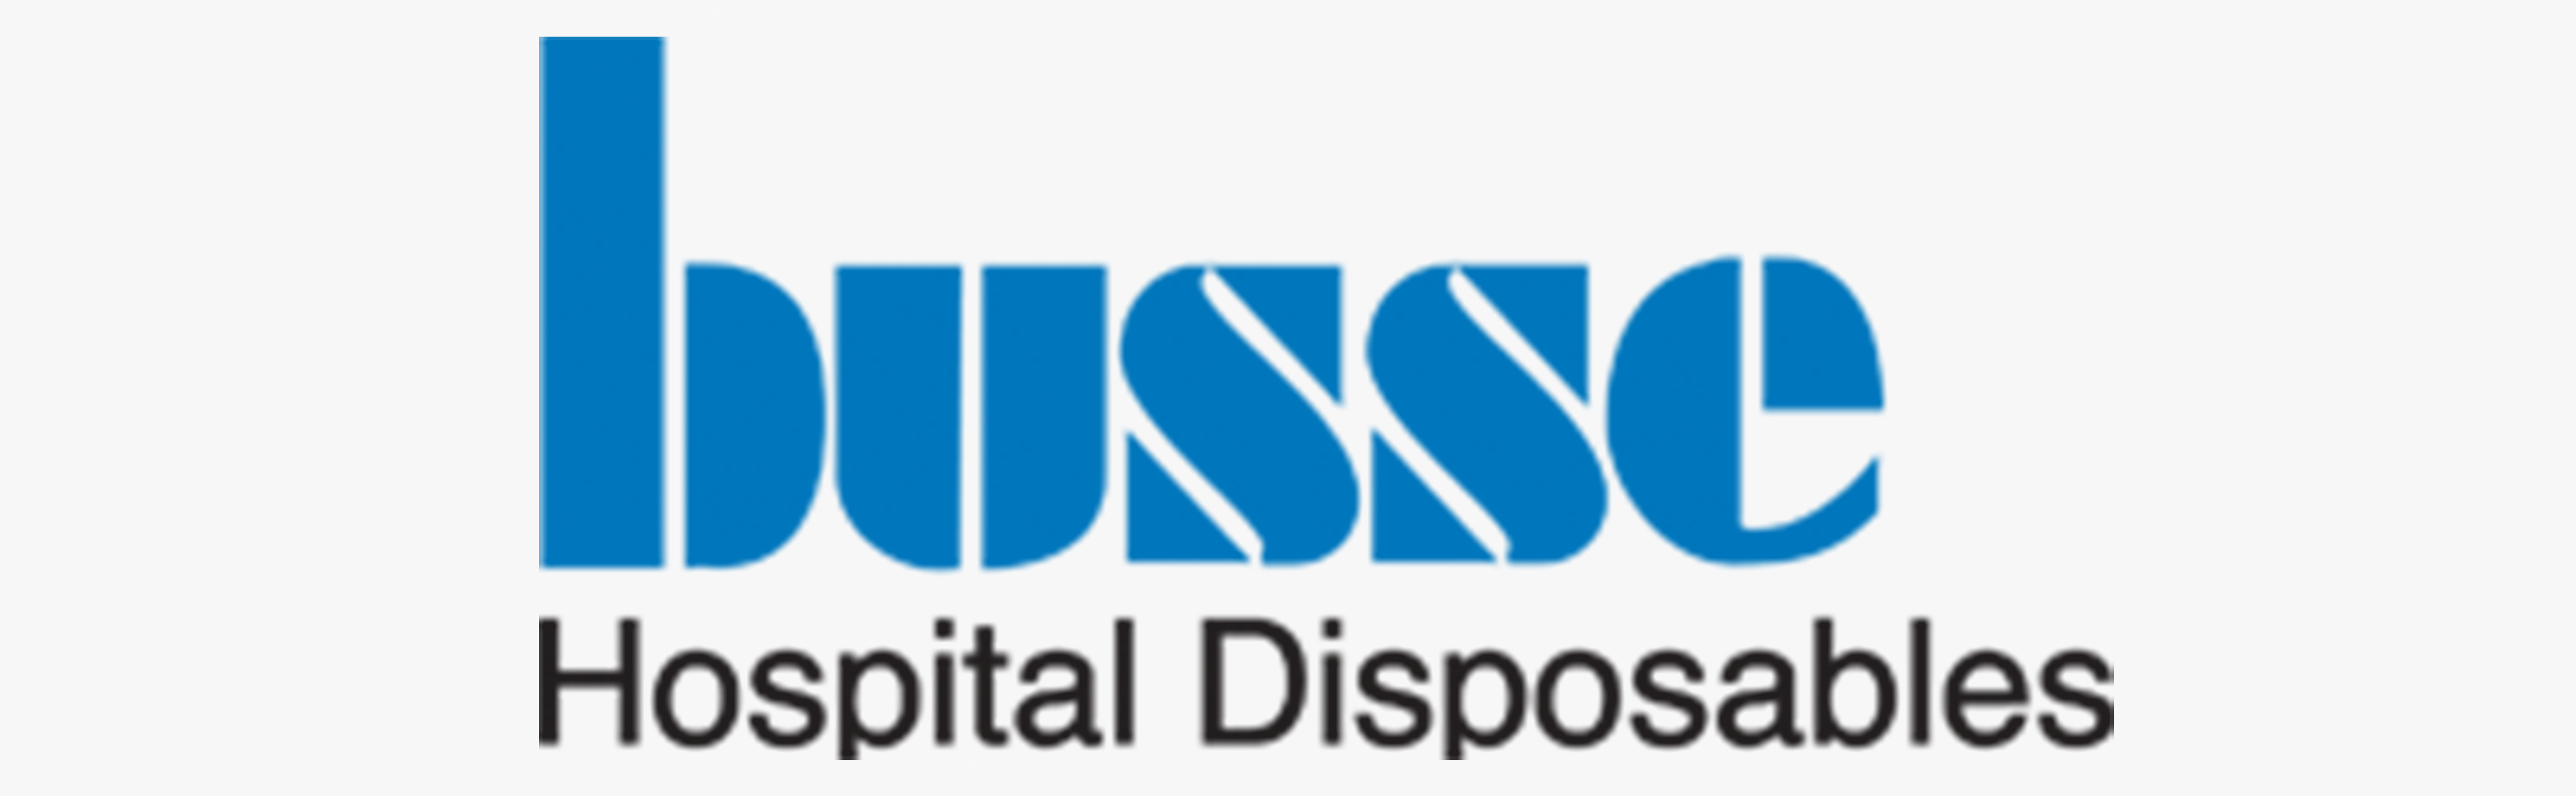 Busse Hospital Disposables, Inc.